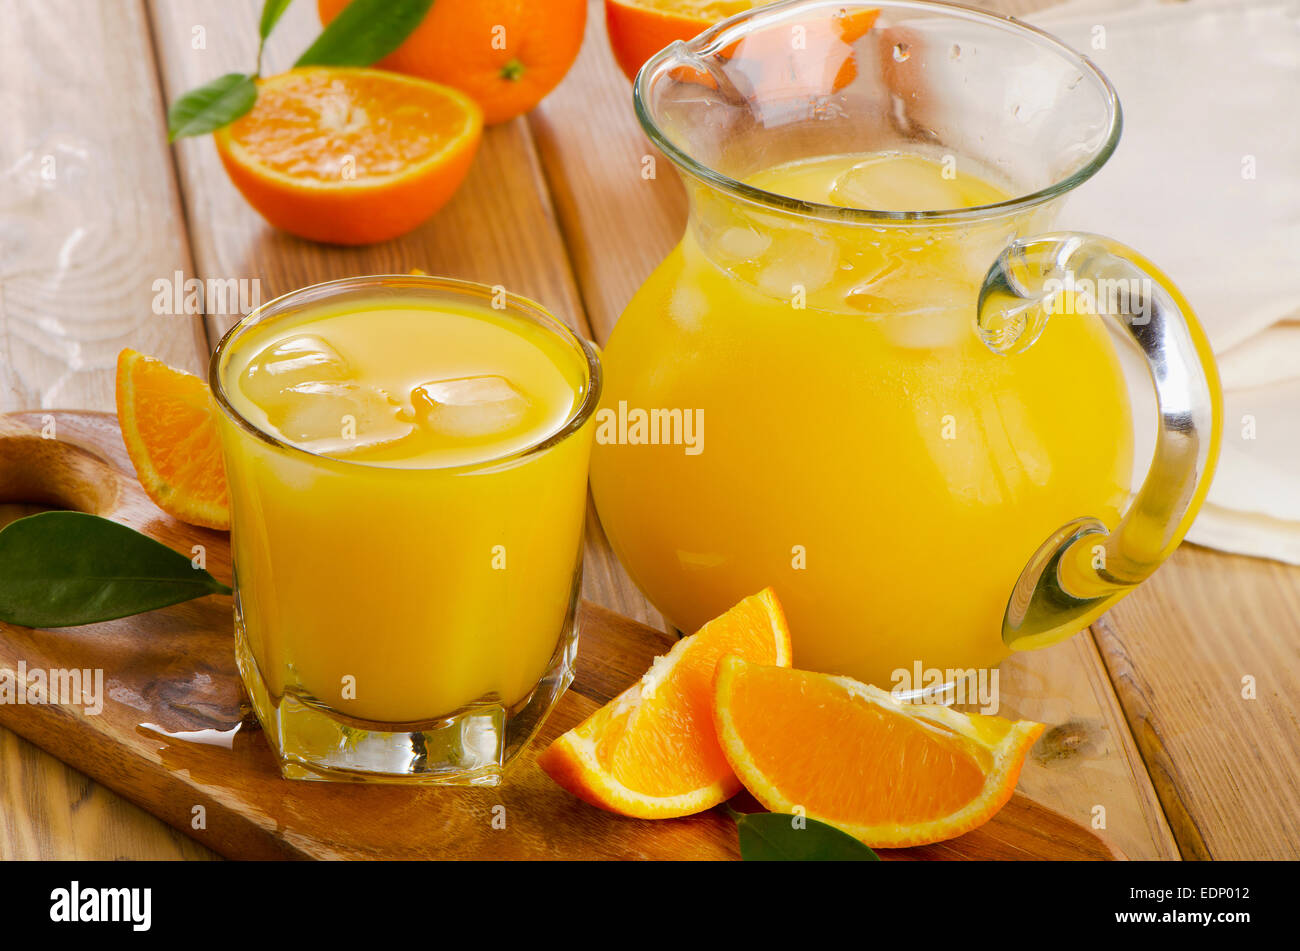 https://c8.alamy.com/comp/EDP012/glass-and-jug-of-orange-juice-with-sliced-orange-selective-focus-EDP012.jpg